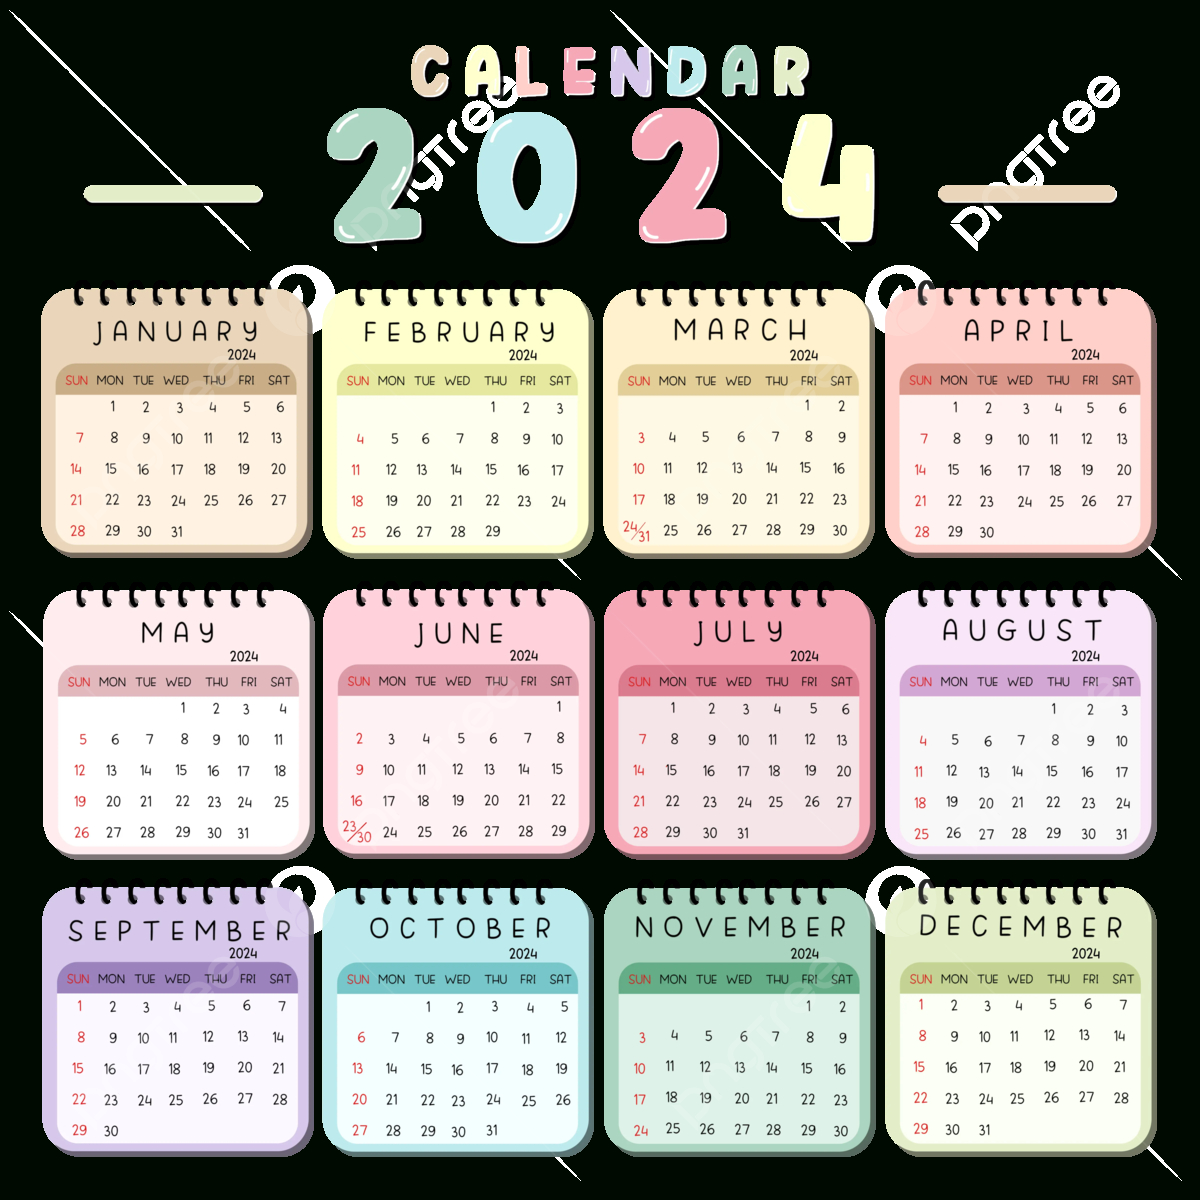 2024 Calendar, Calendar 2024, Calendar Year 2024, Monthly Calendar | 2024 Yearly Calendar Image